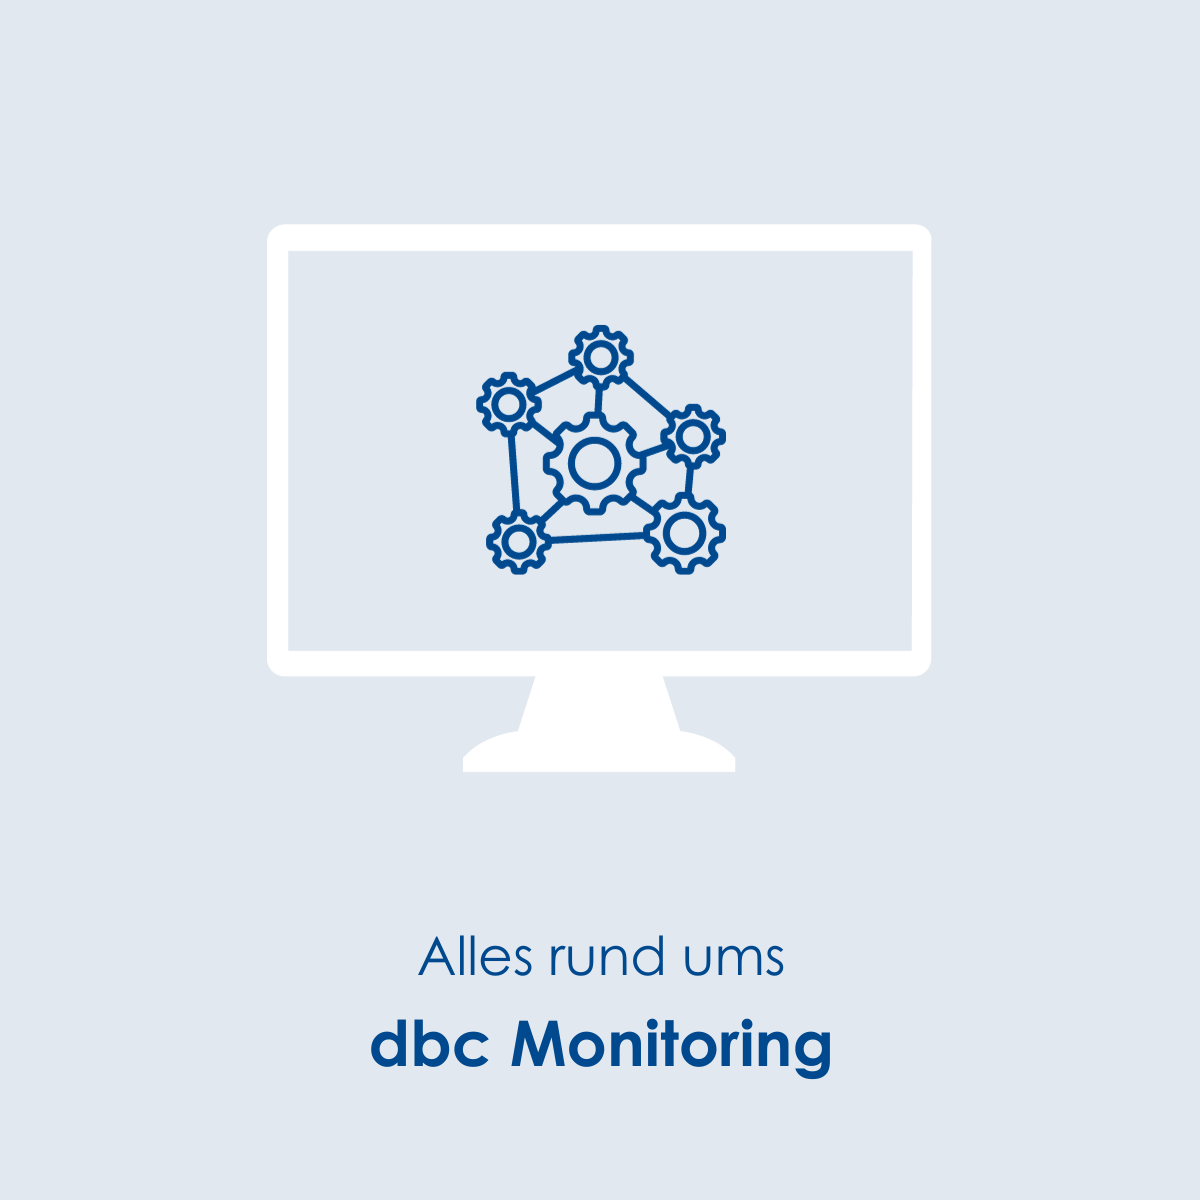 dbc Monitoring